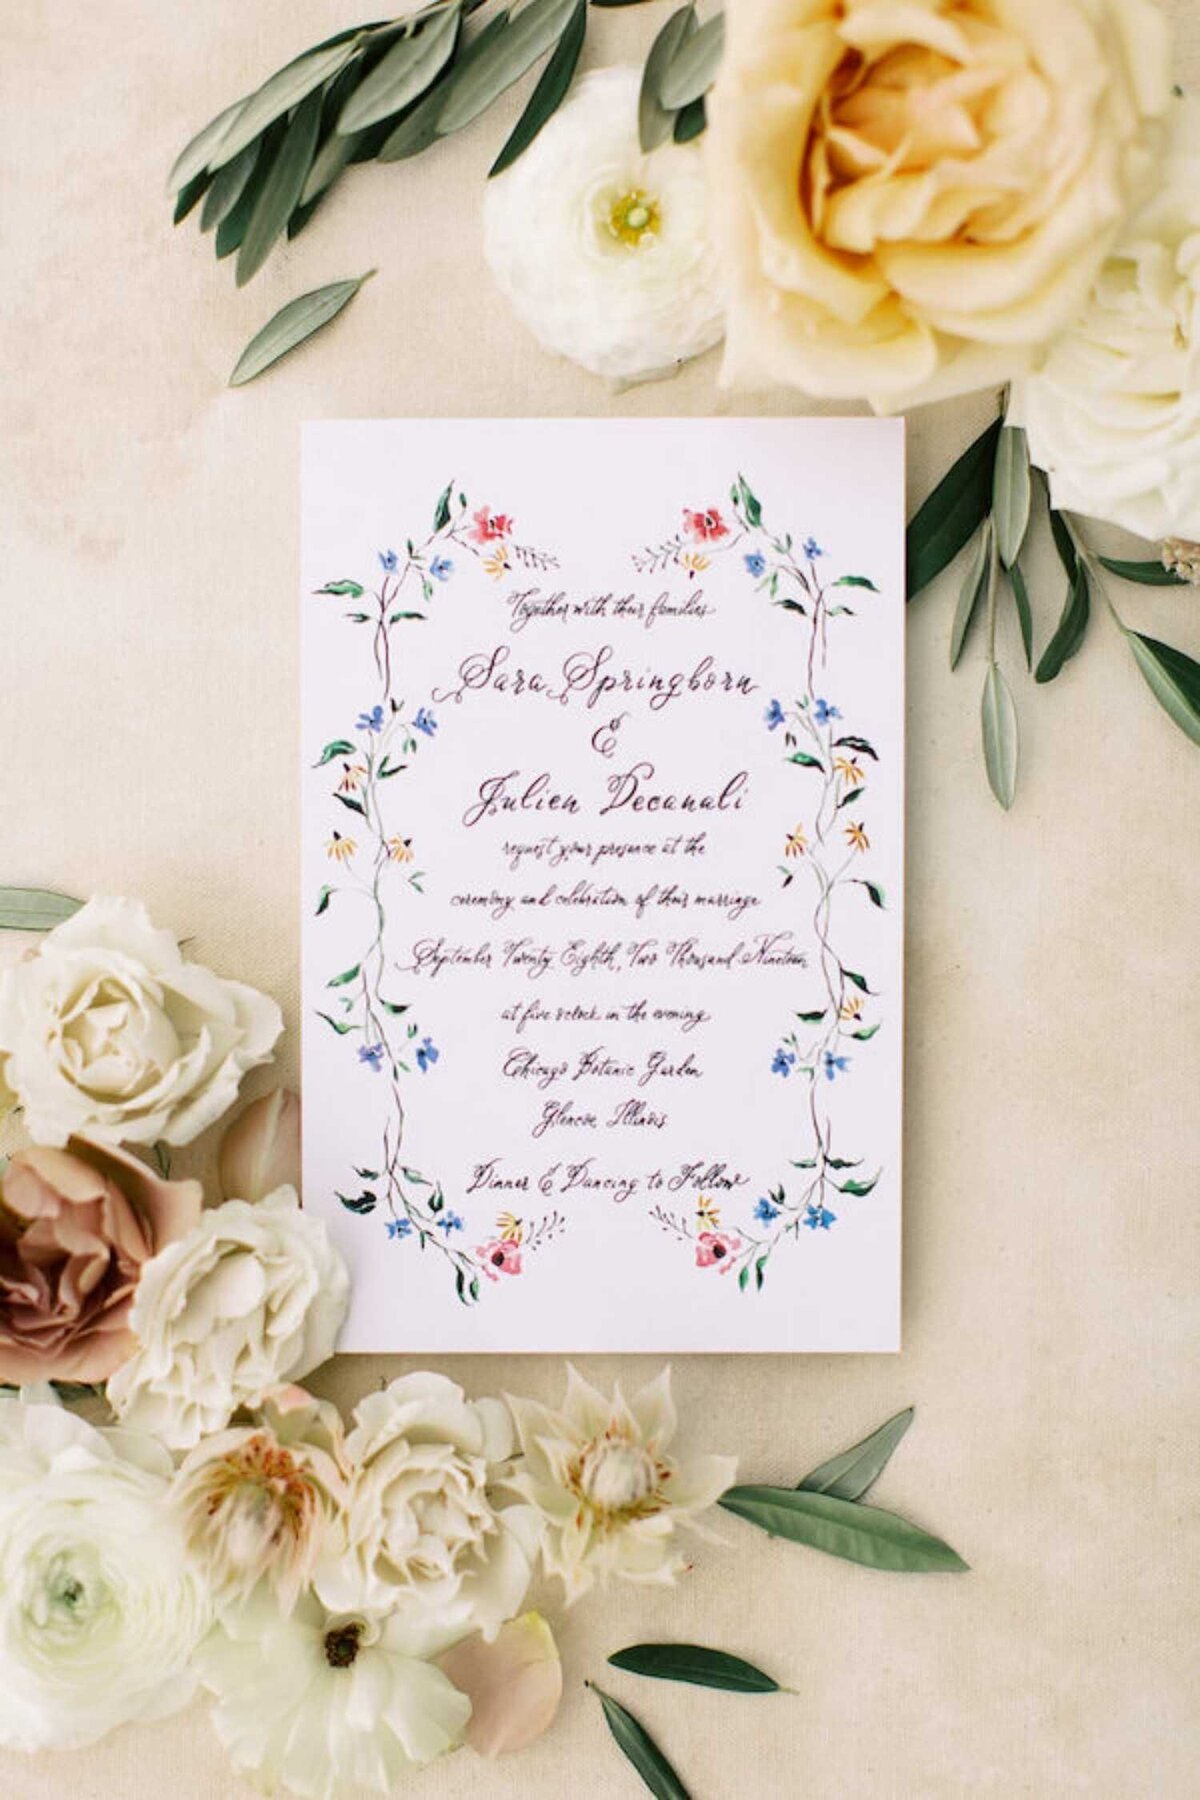 Garden style wedding invitation with watercolor floral for a luxury Chicago outdoor garden wedding.